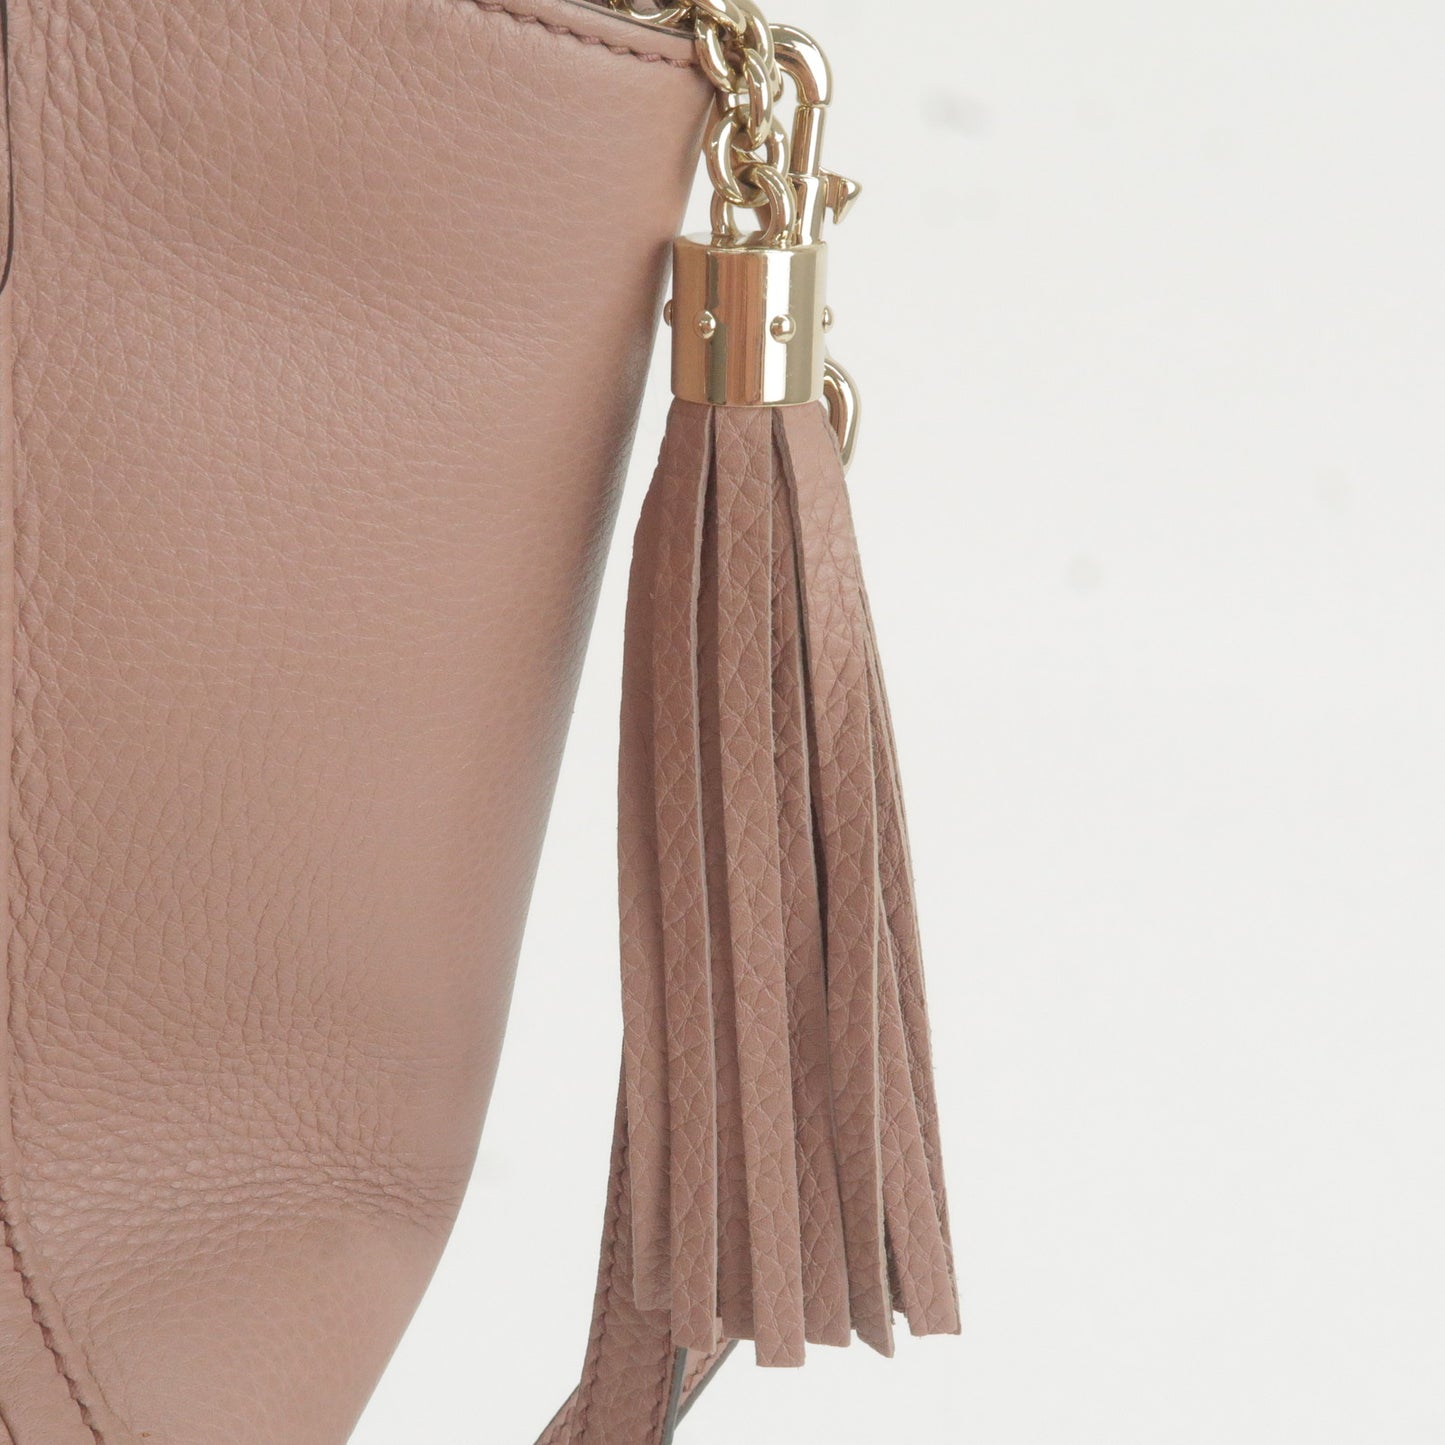 GUCCI SOHO Interlocking G Leather 2Way Hand Bag Pink 369176